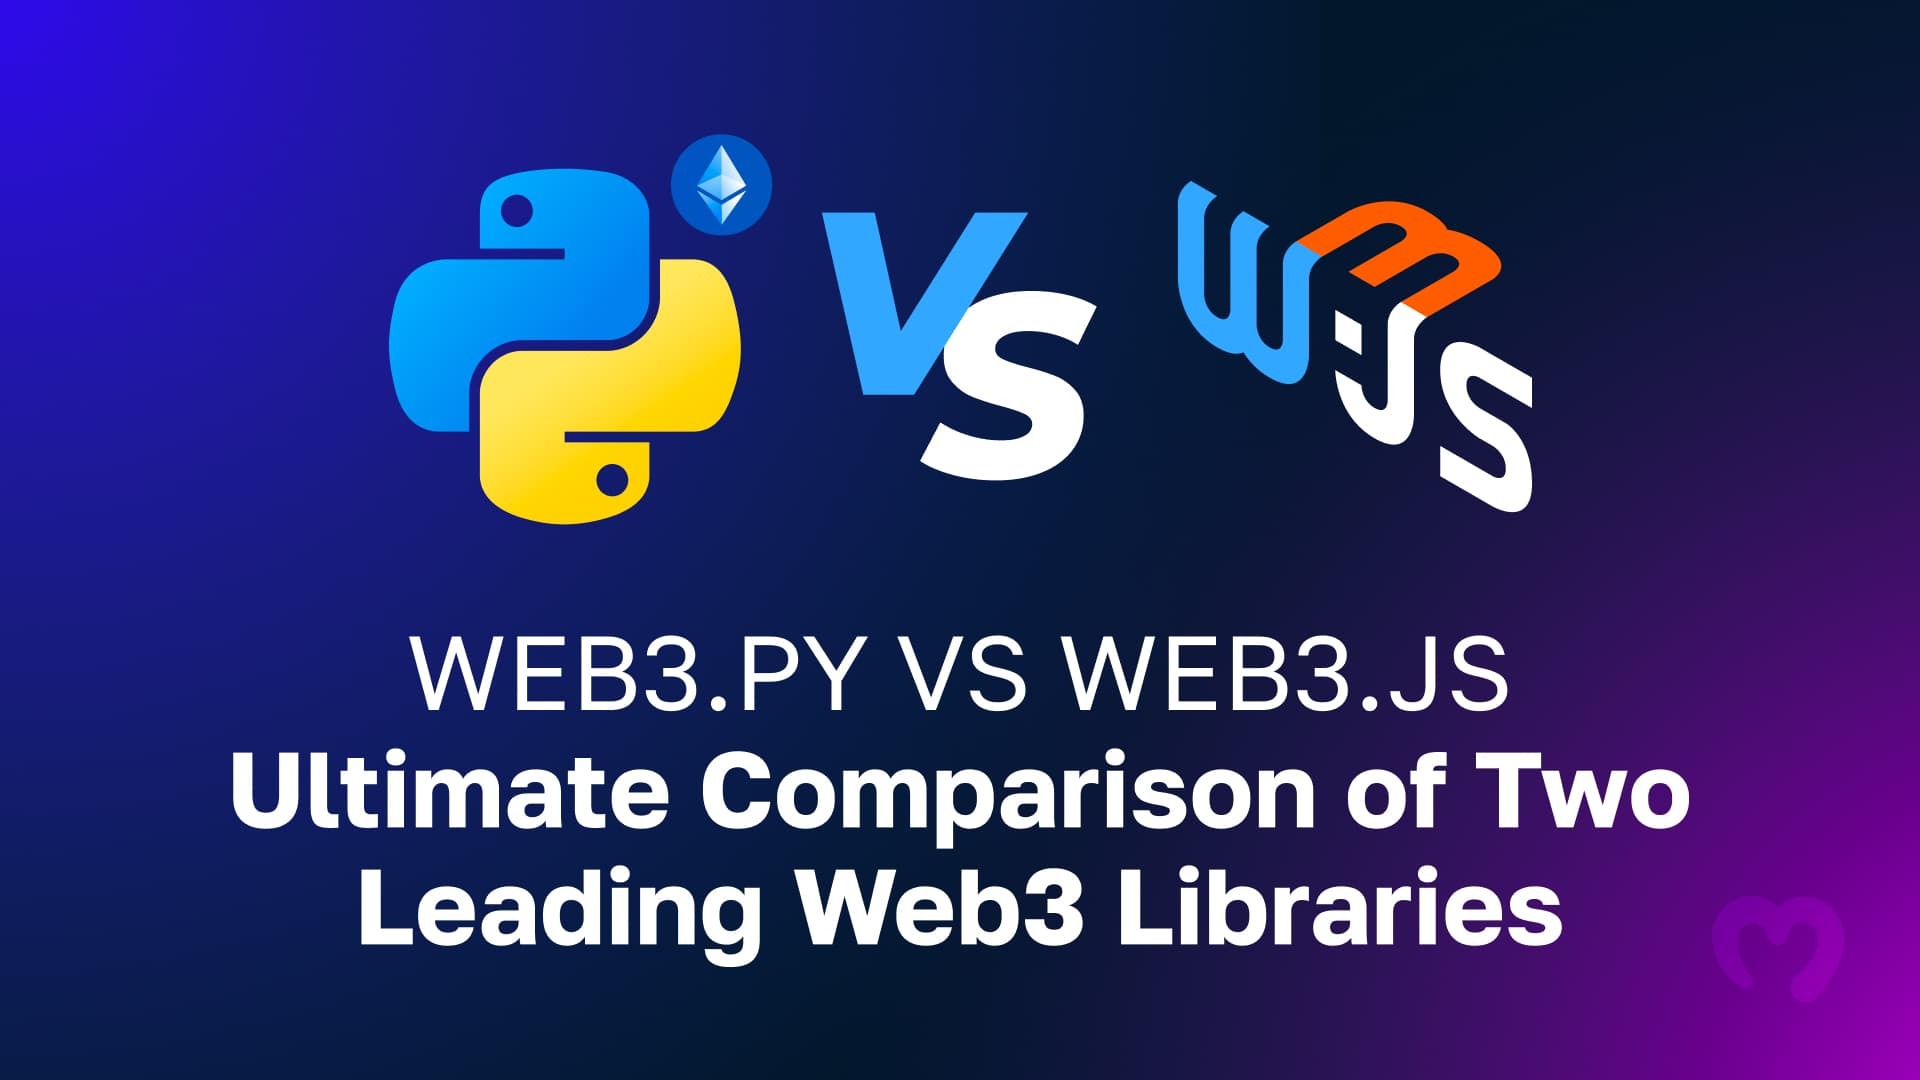 Exploring Web3.py vs Web3.js - Ultimate Comparison of Two Leading Web3 Libraries